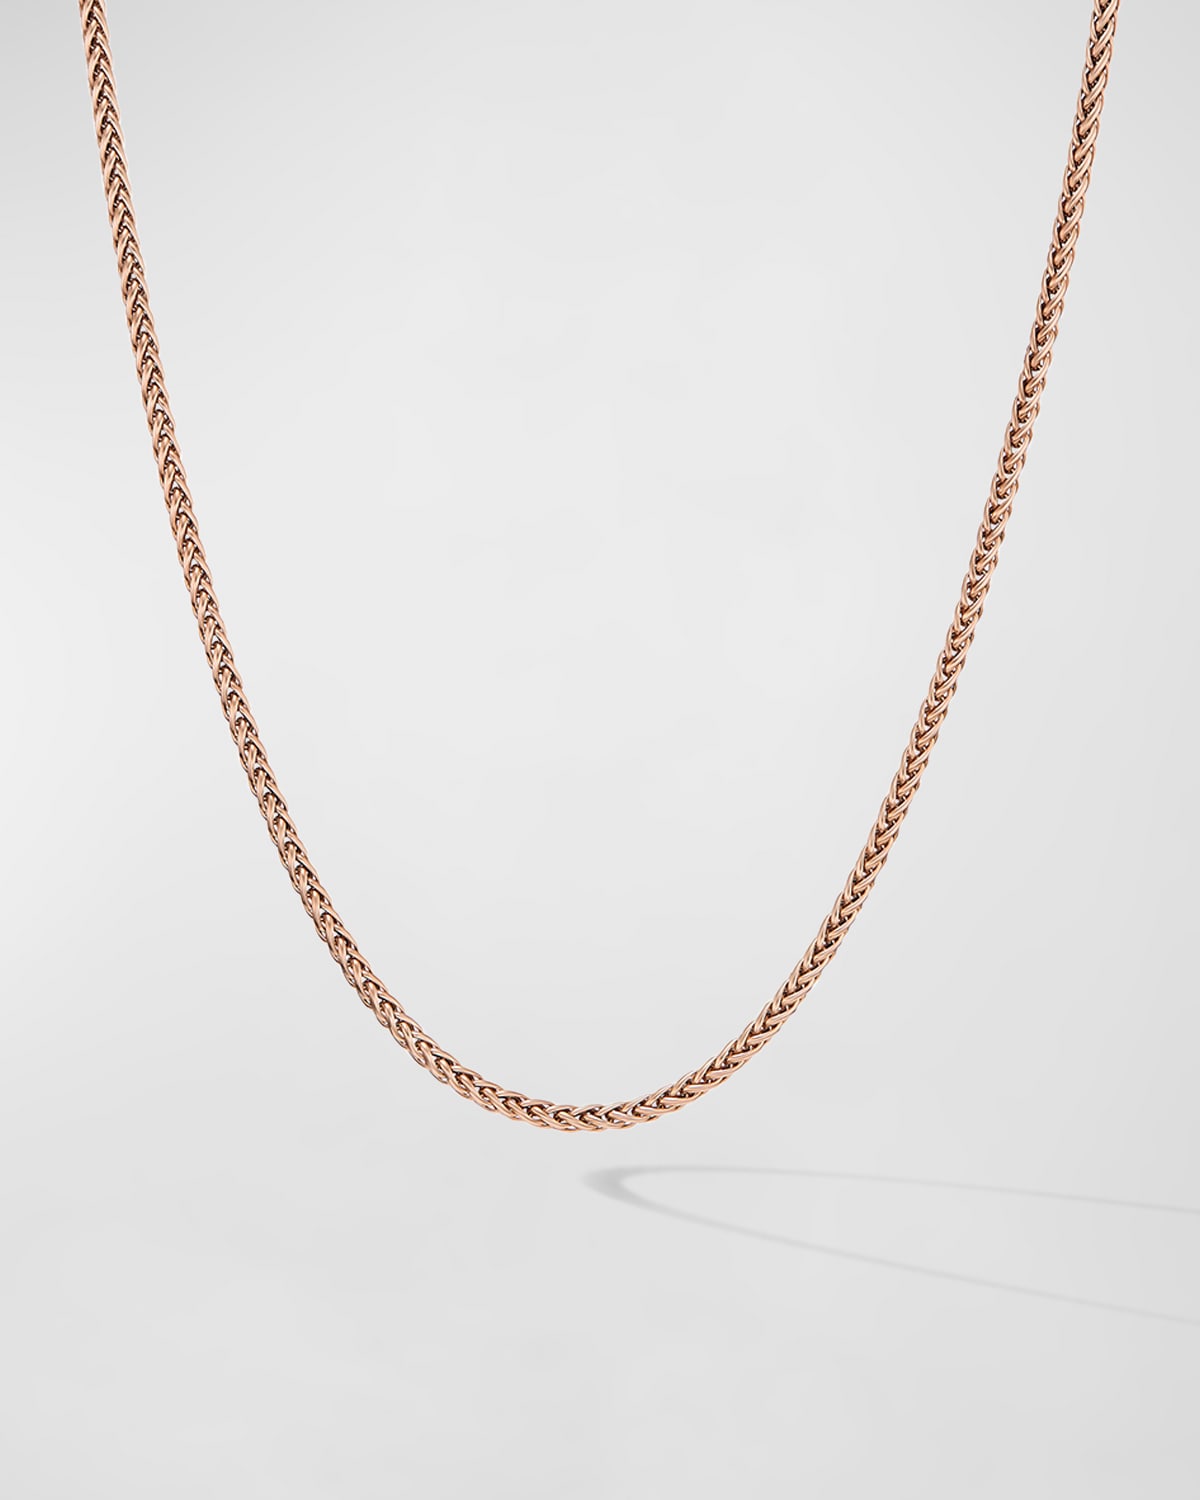 David Yurman Men's Wheat Chain Necklace in 18K Rose Gold, 2.5mm, 18"L